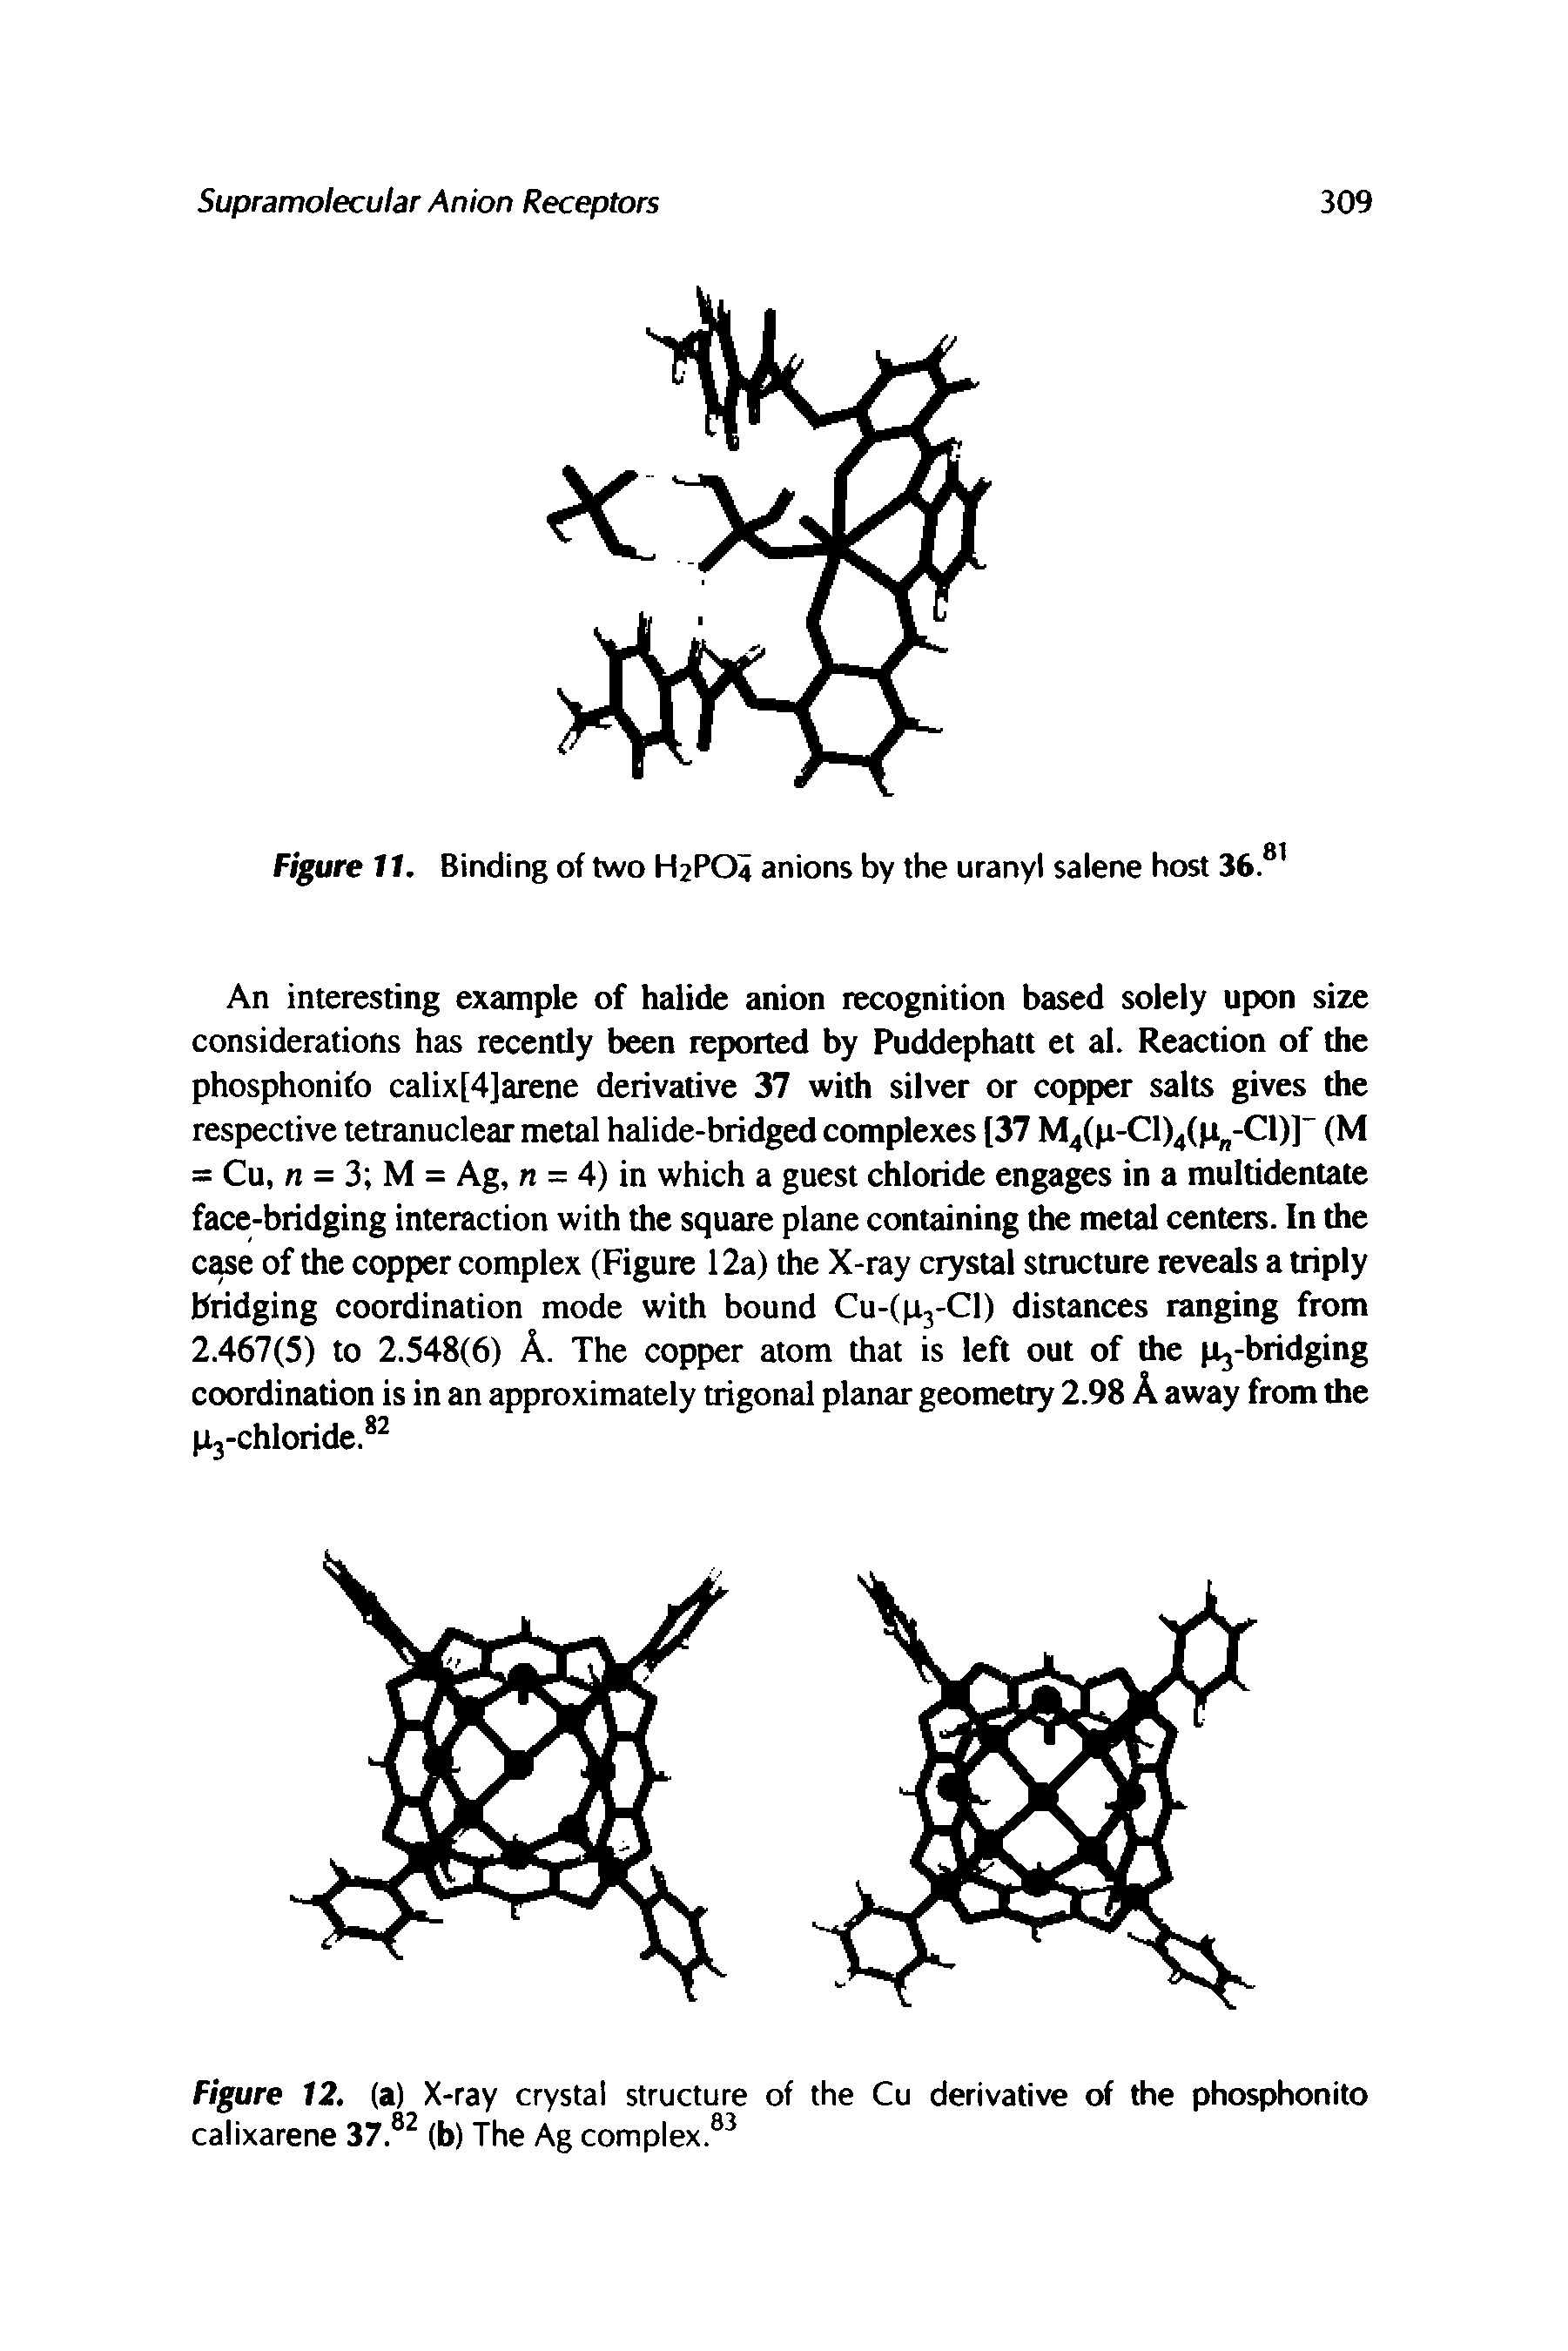 Figure 11. Binding of two H2PO4 anions by the uranyl salene host 36.